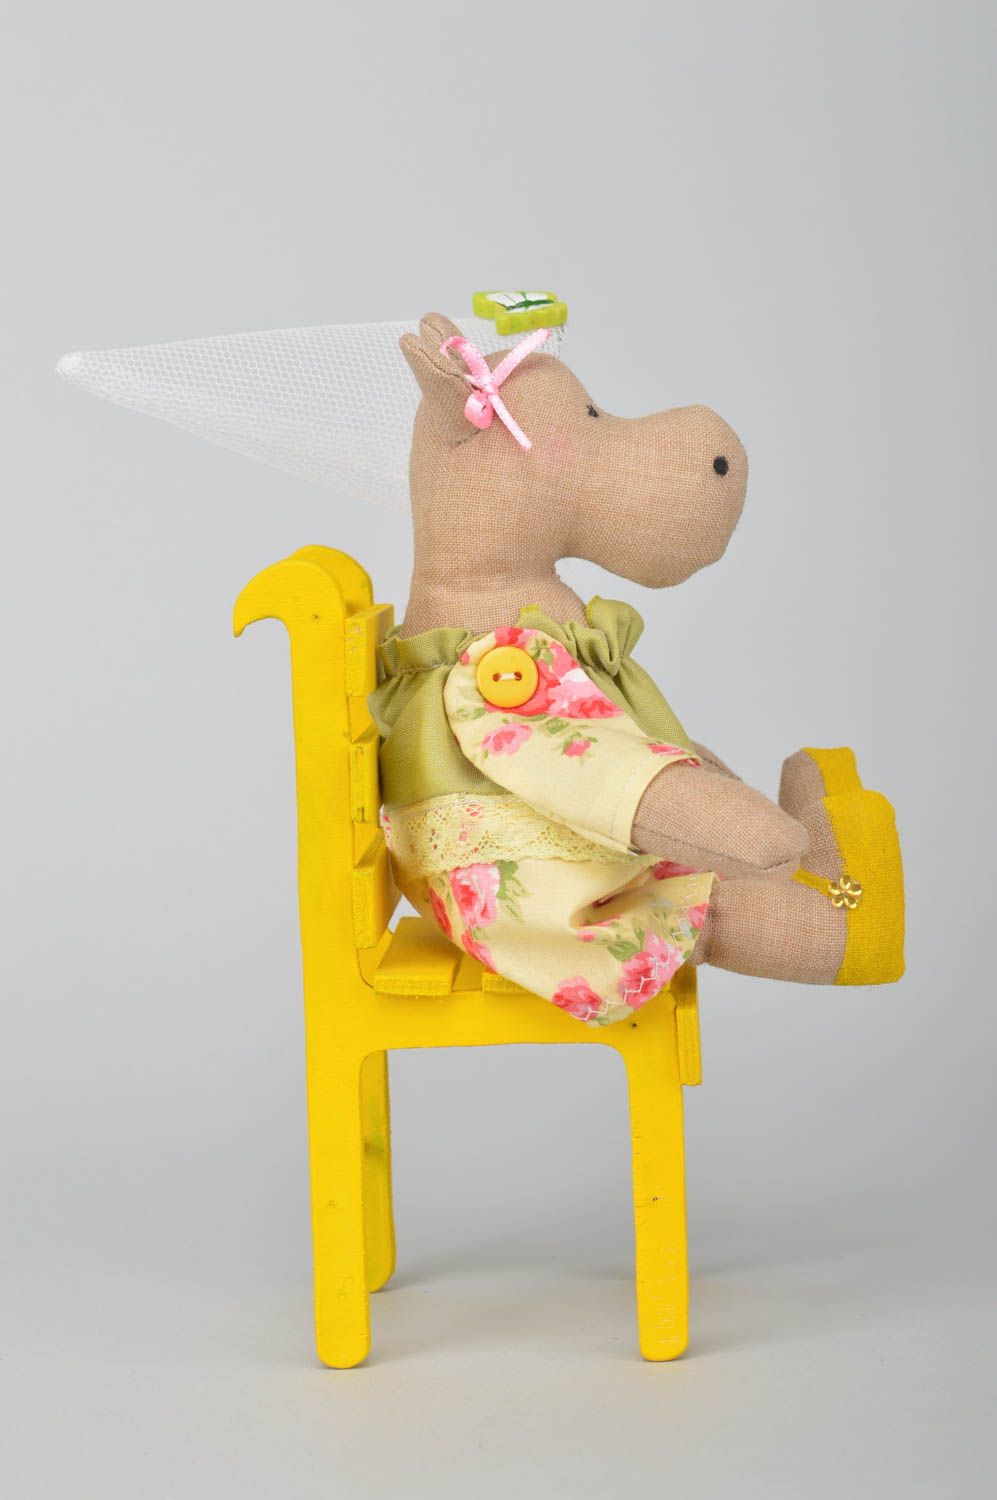 Beautiful handmade cotton fabric toy stuffed soft toy for kids nursery designs photo 2